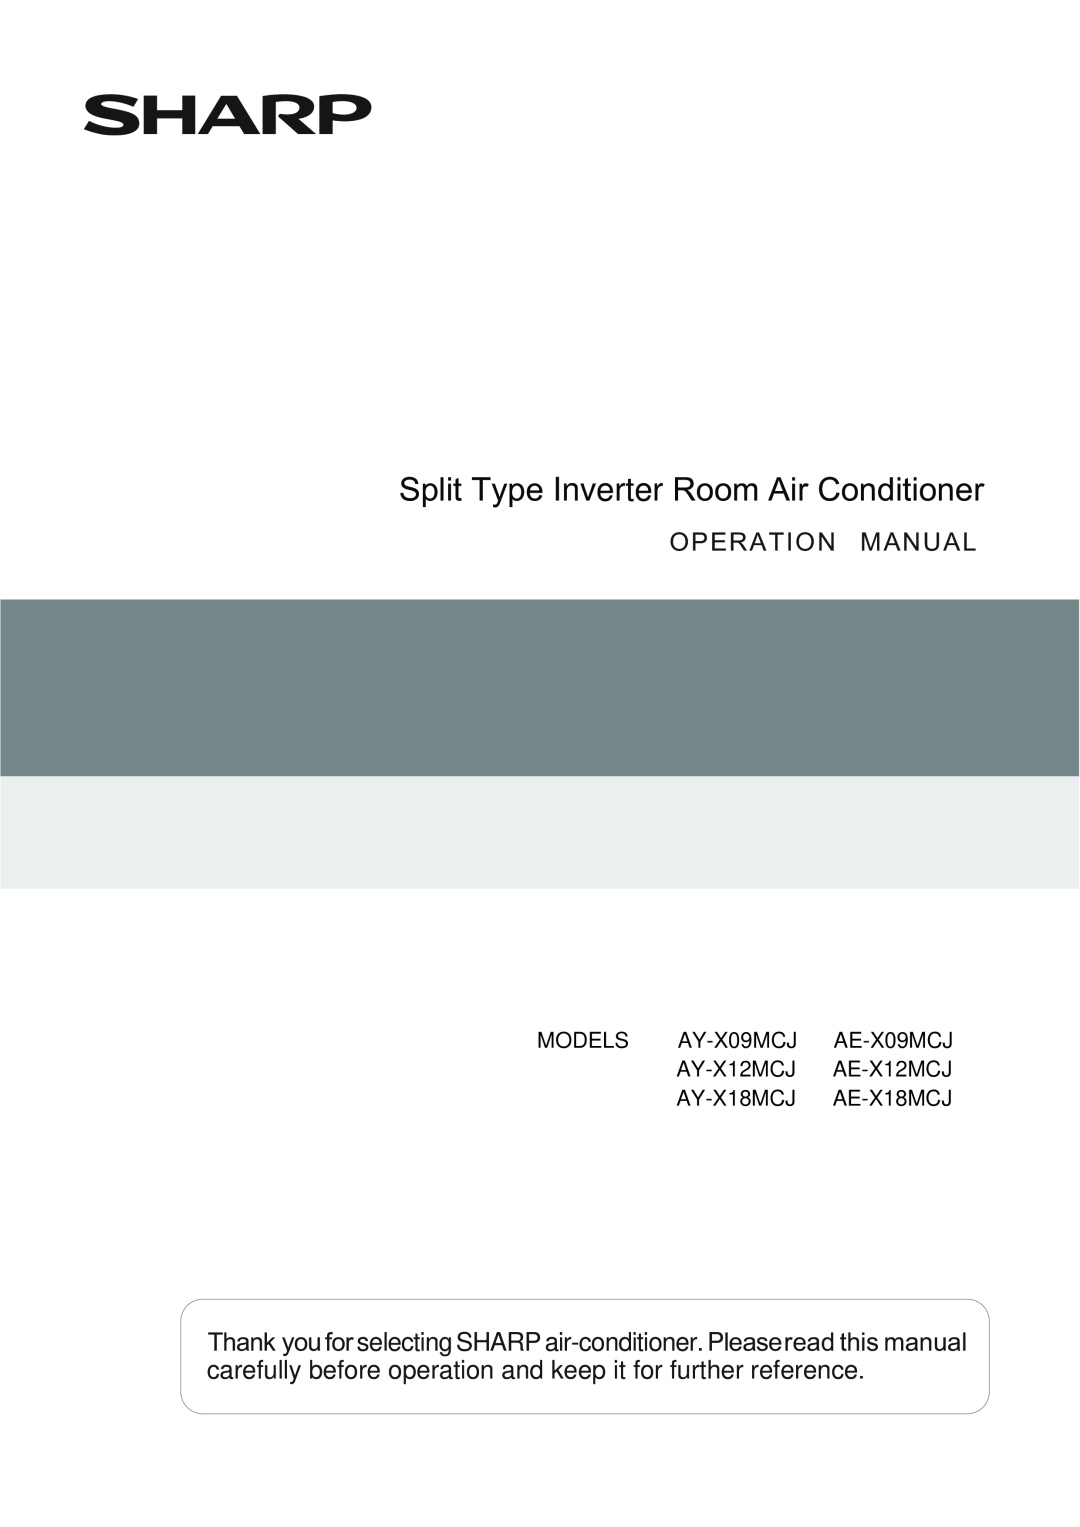 Sharp AE-X12MCJ operation manual Split Type Inverter Room Air Conditioner, MODELS AY-X09MCJ AY-X12MCJ AY-X18MCJ 